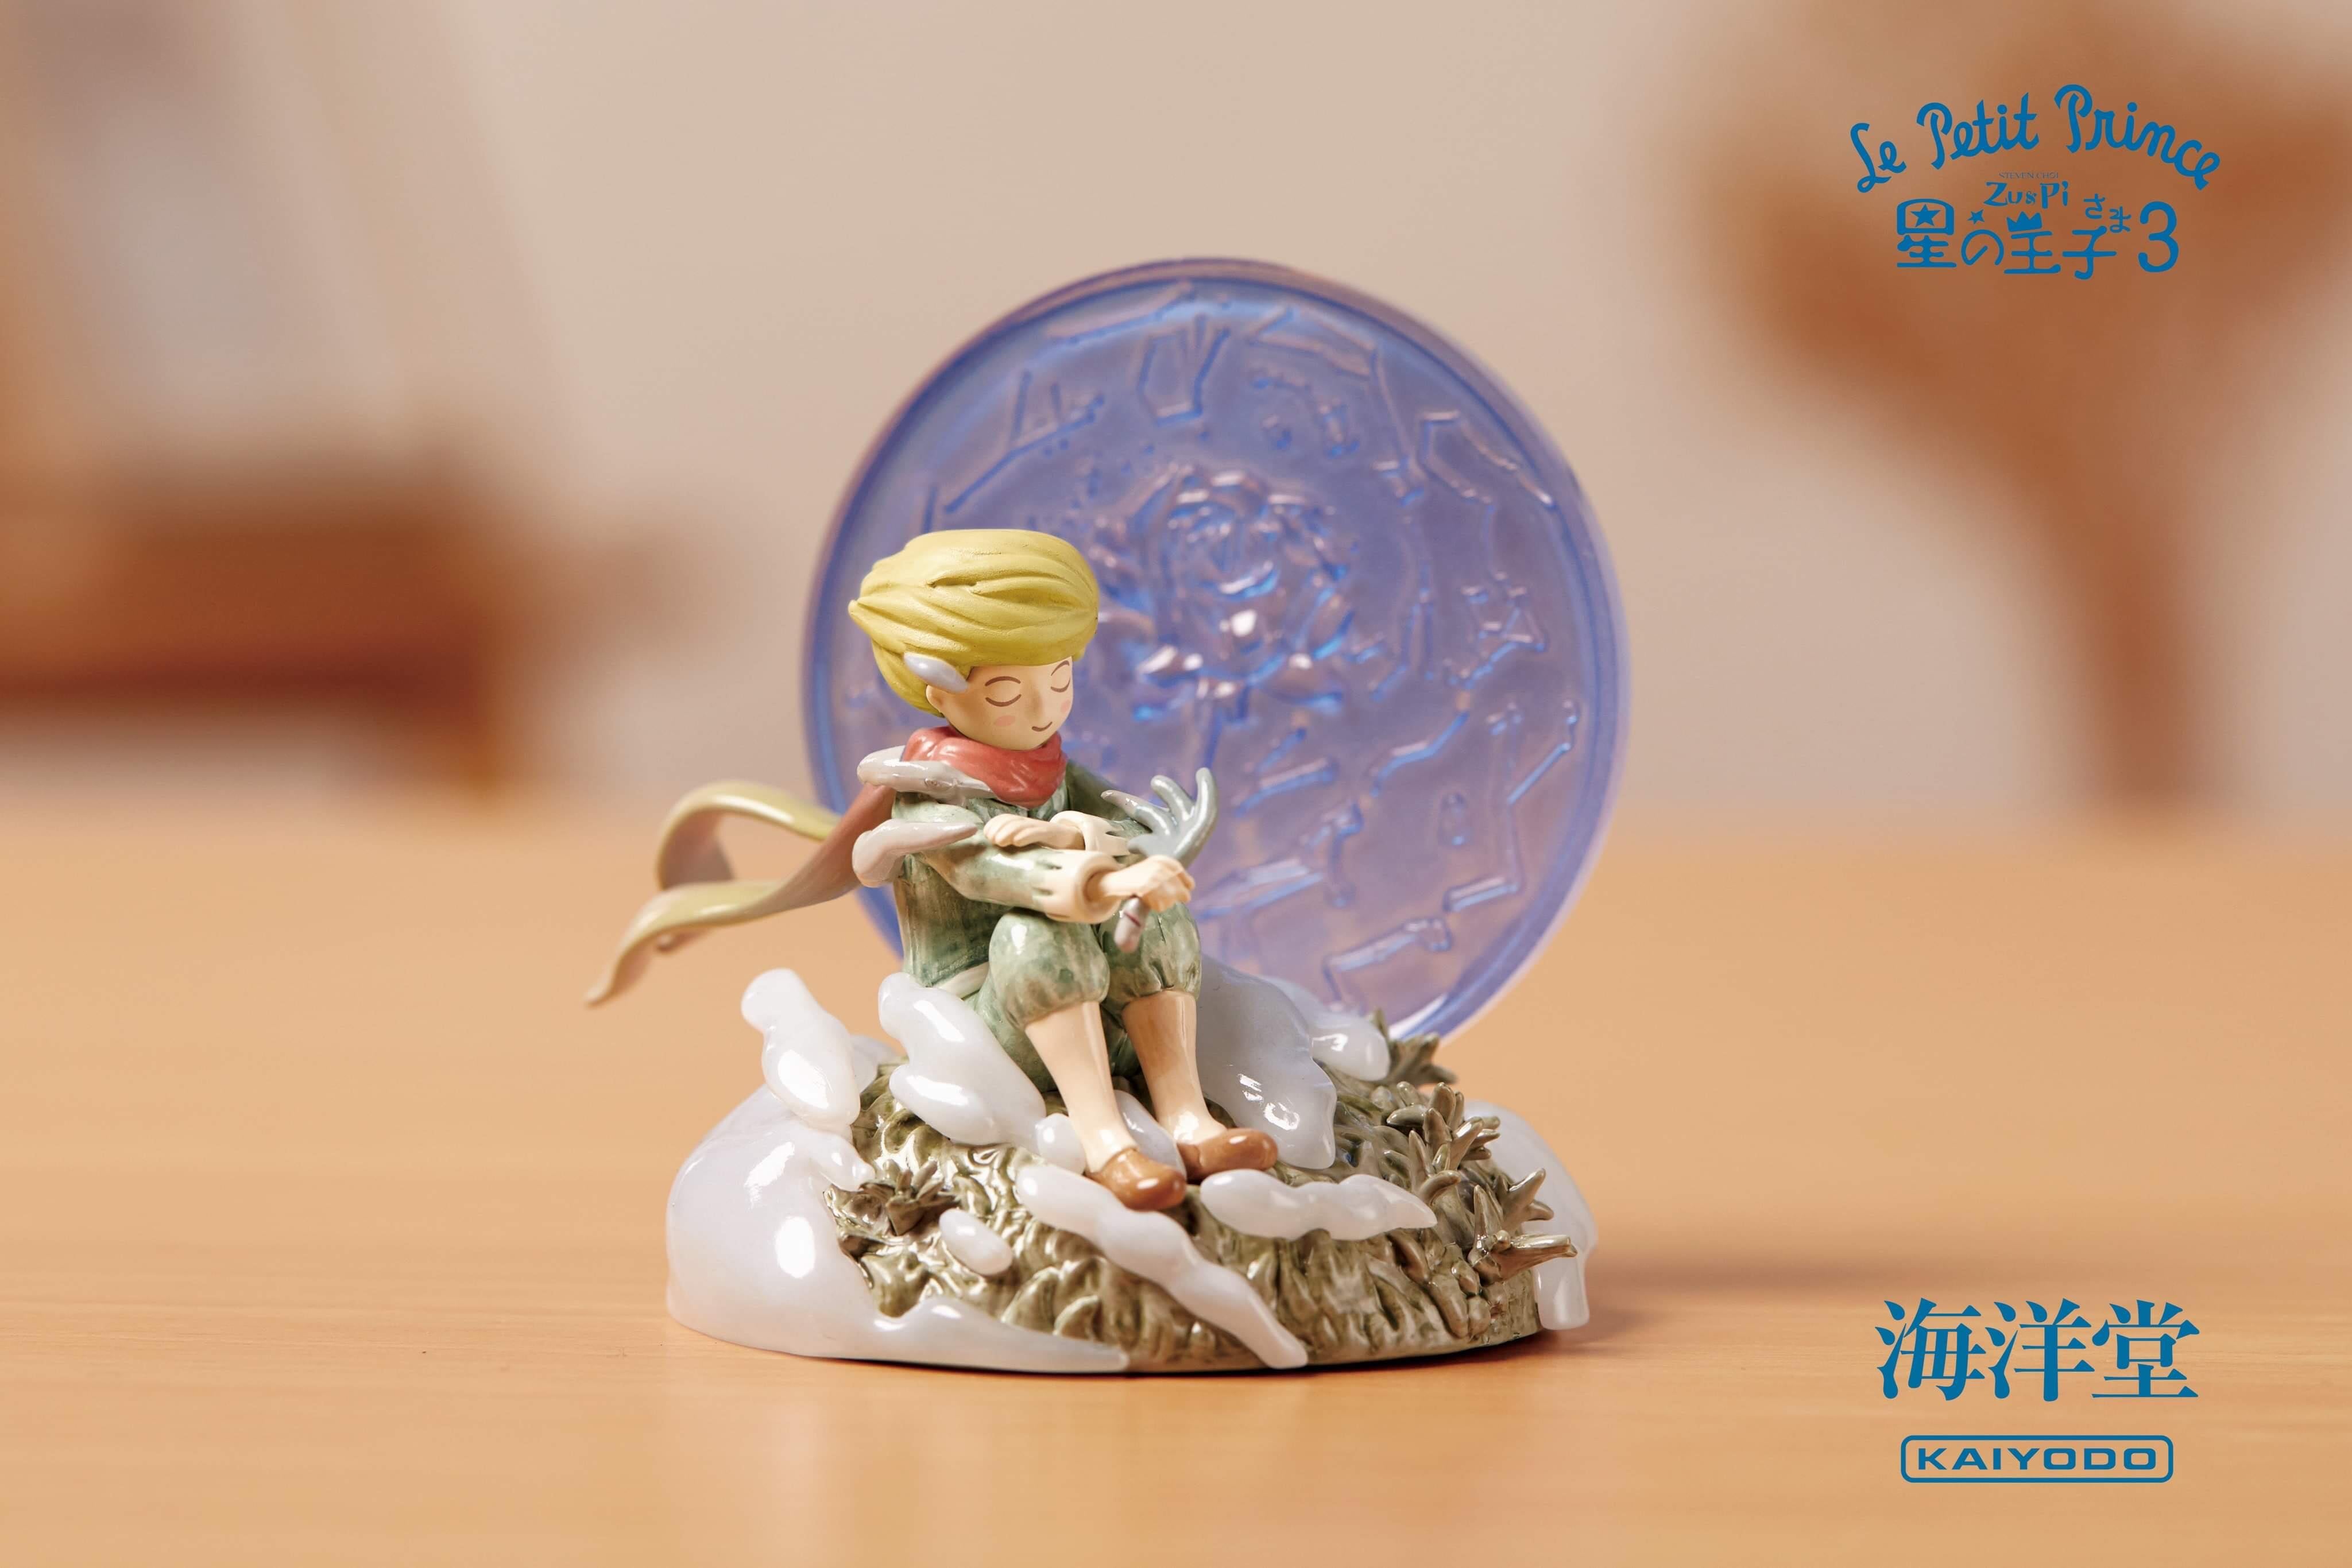 The Little Prince Vol. 3 by Zu & Pi